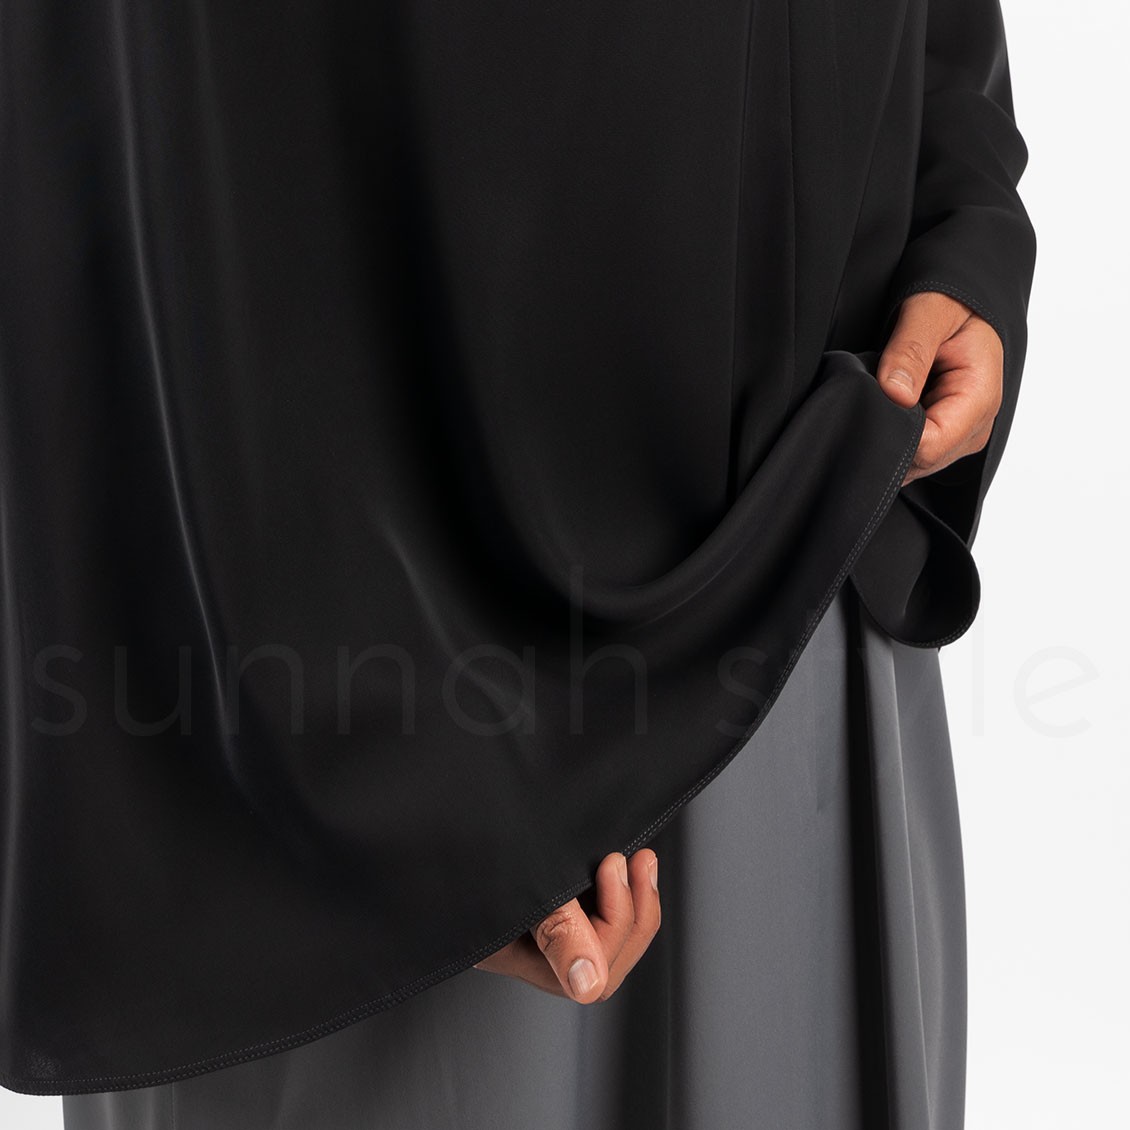 Sunnah Style Essentials Khimar Hip Length Black